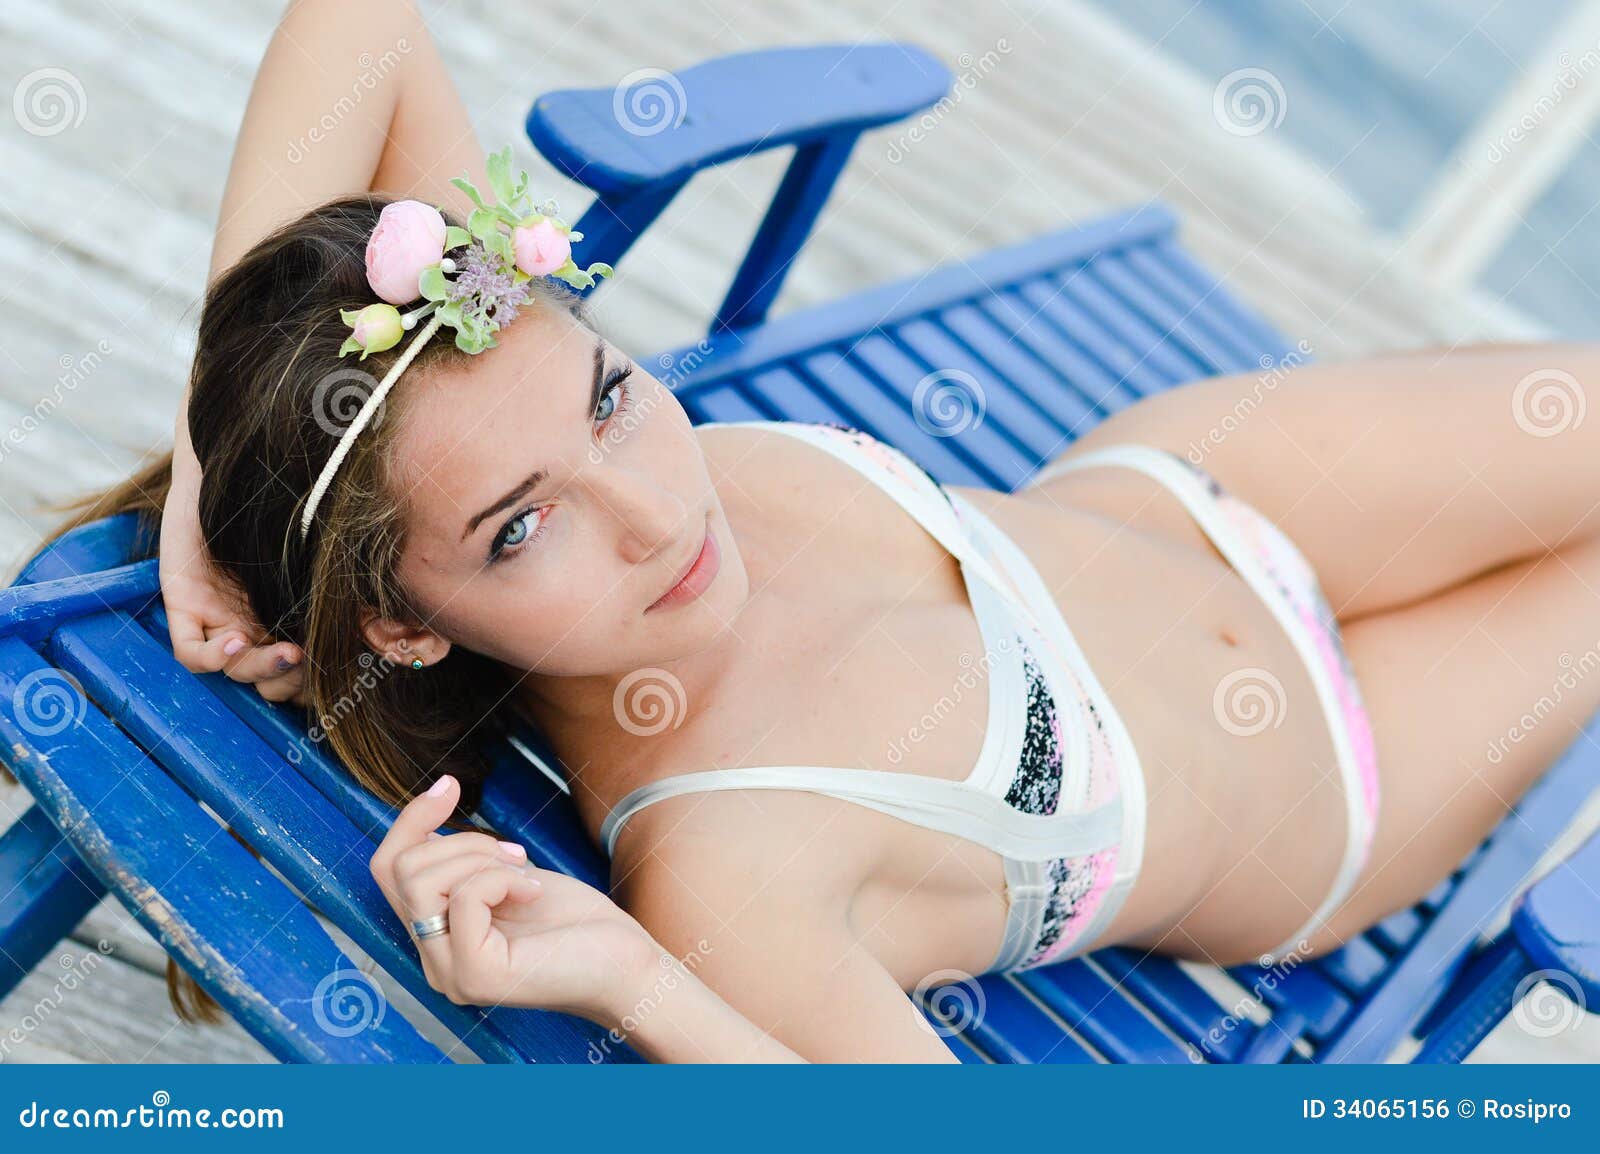 https://thumbs.dreamstime.com/z/young-woman-bikini-enjoying-sunny-day-sun-lounge-portrait-pretty-sea-beach-lying-lounger-34065156.jpg